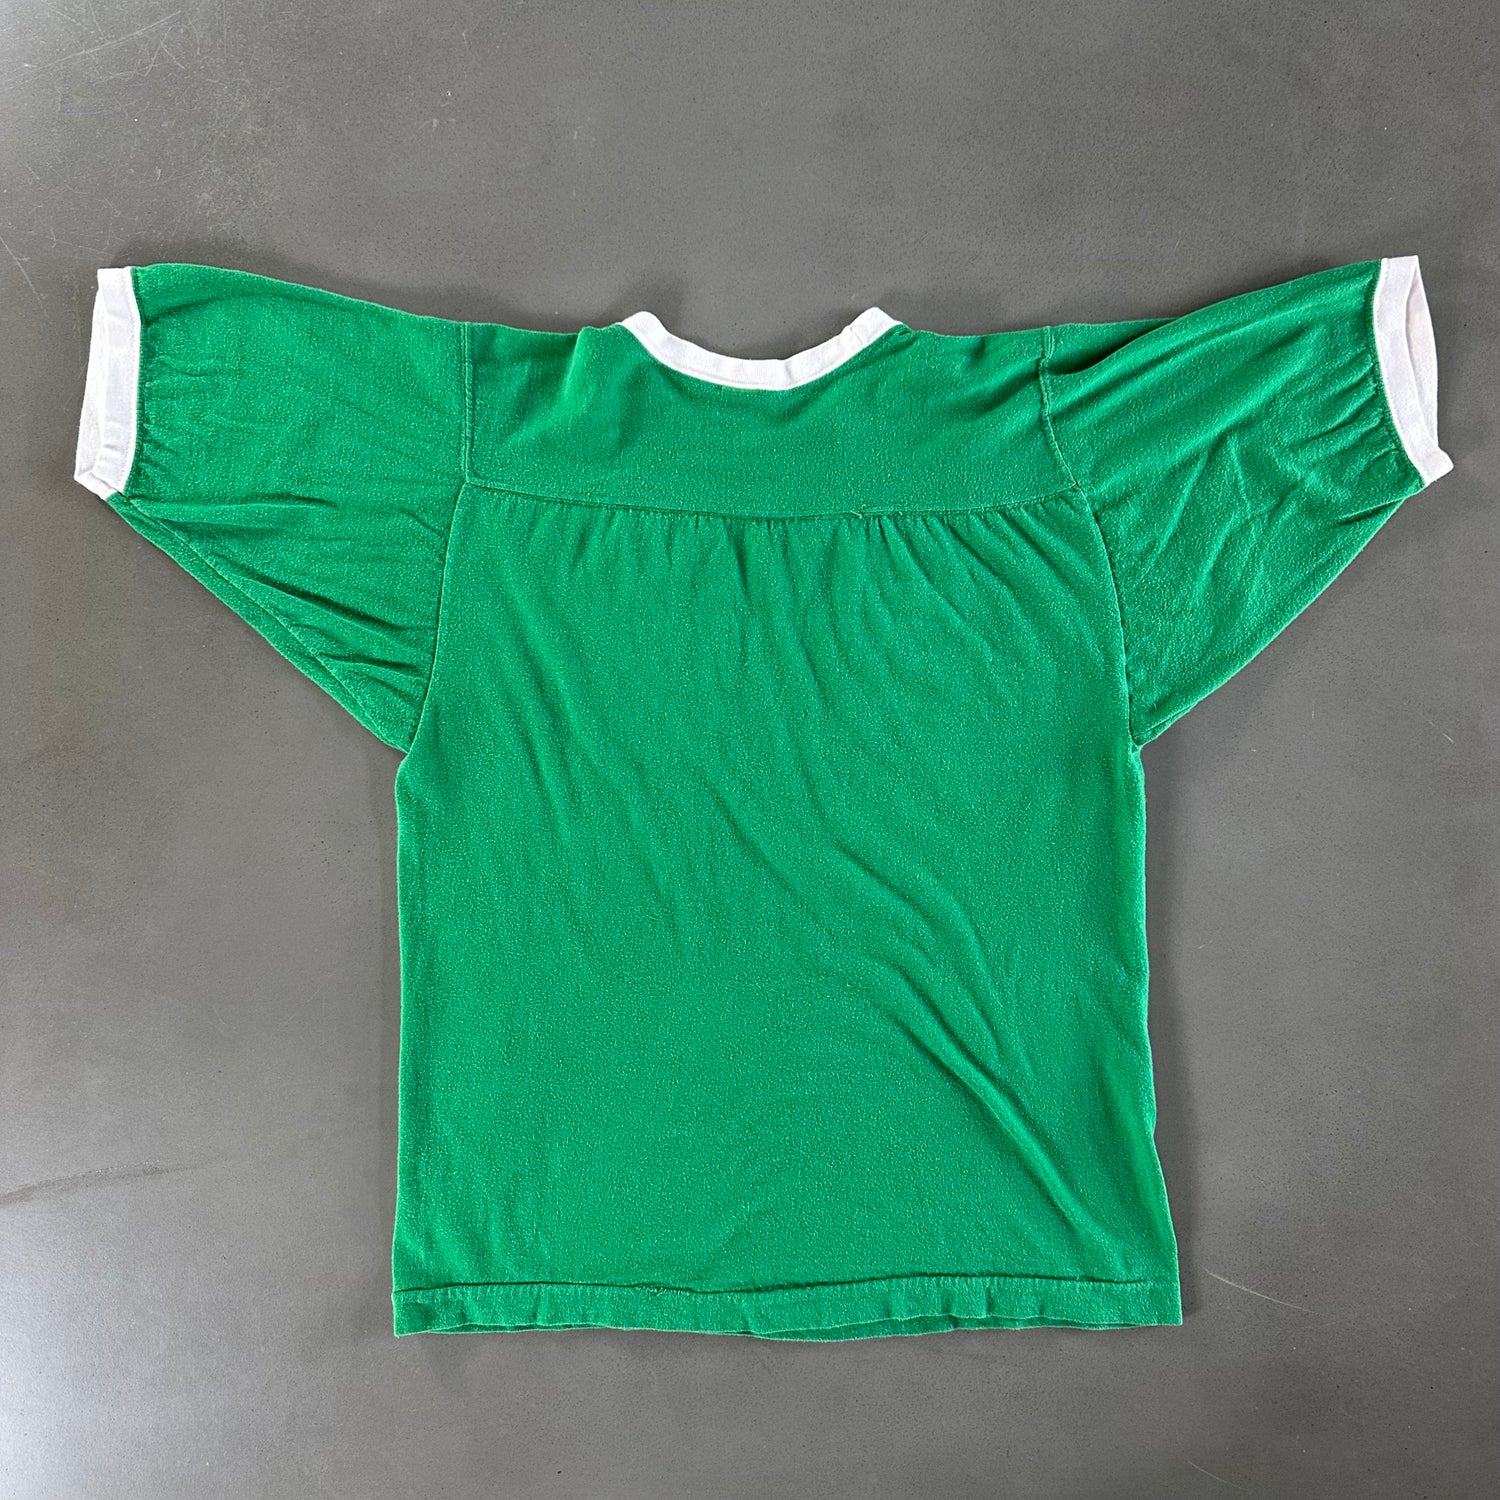 Vintage 1980s Kappa Delta T-shirt size Small